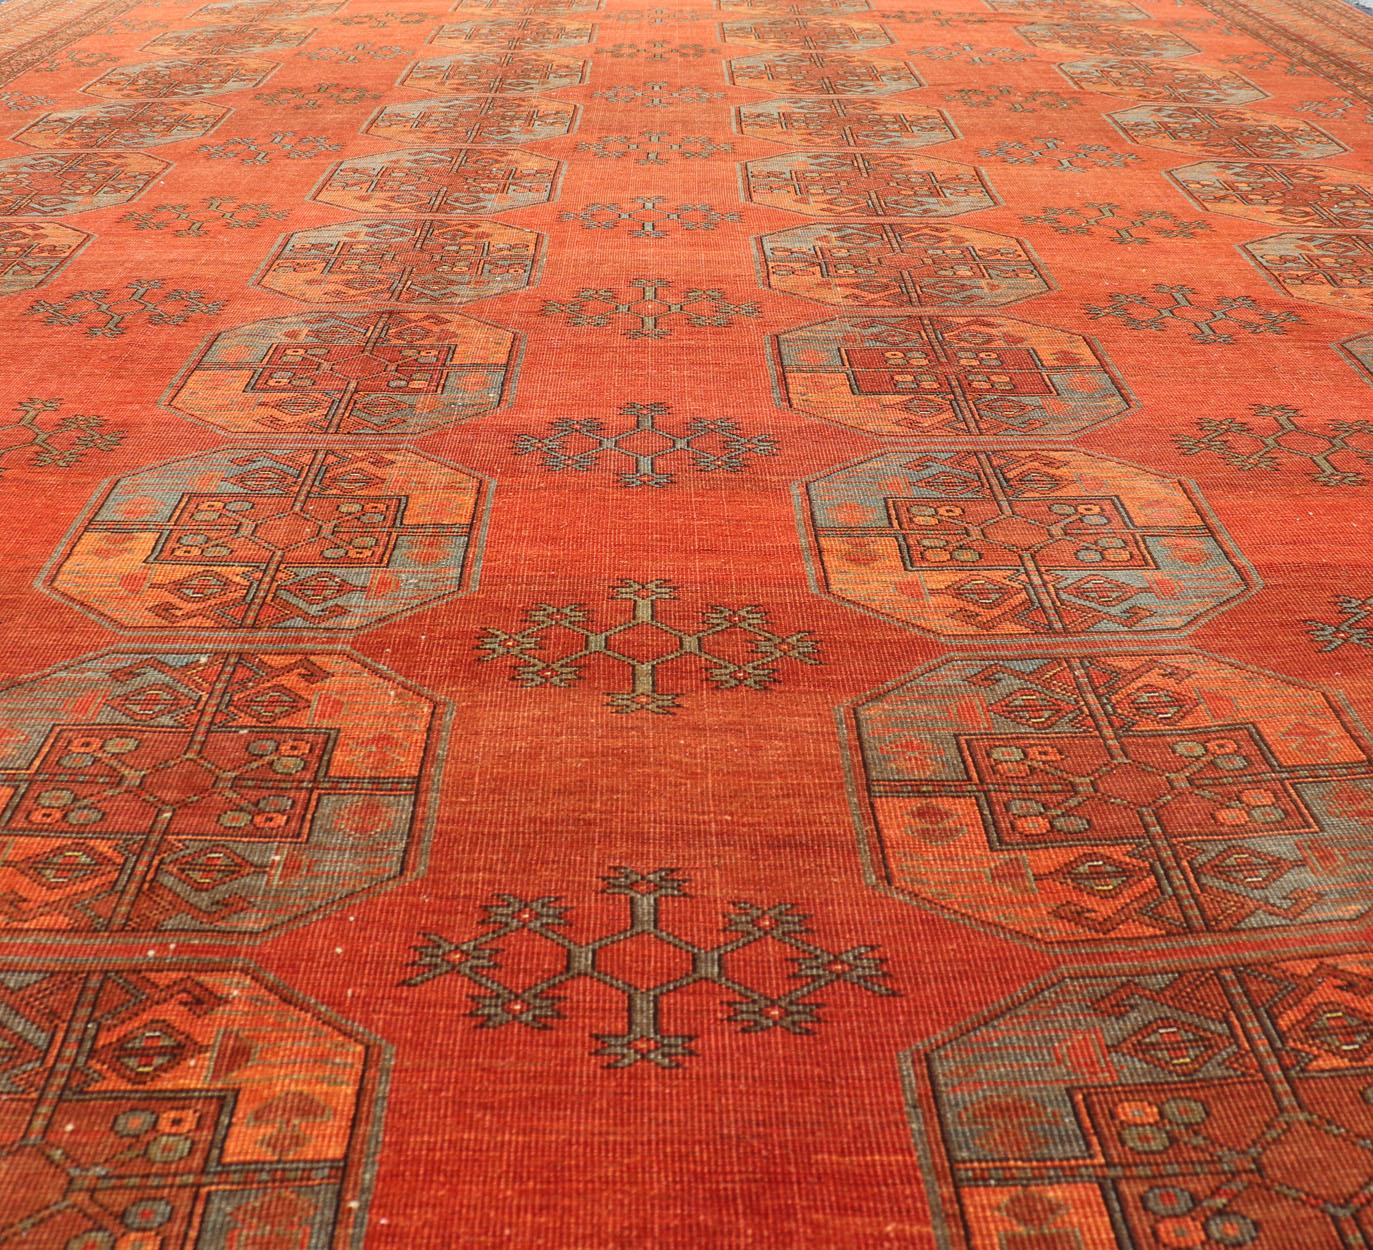 Large Turkomen rug with All-over Gul Bokhara design. Hand-Knotted 1930's Turkomen Rug with Repeating Gul Design. Keivan Woven Arts; rug EMB-9503-P13580, country of origin / type: Turkestan / Ersari/Turkoman, circa 1930s.

Measures: 11'1 x 13'